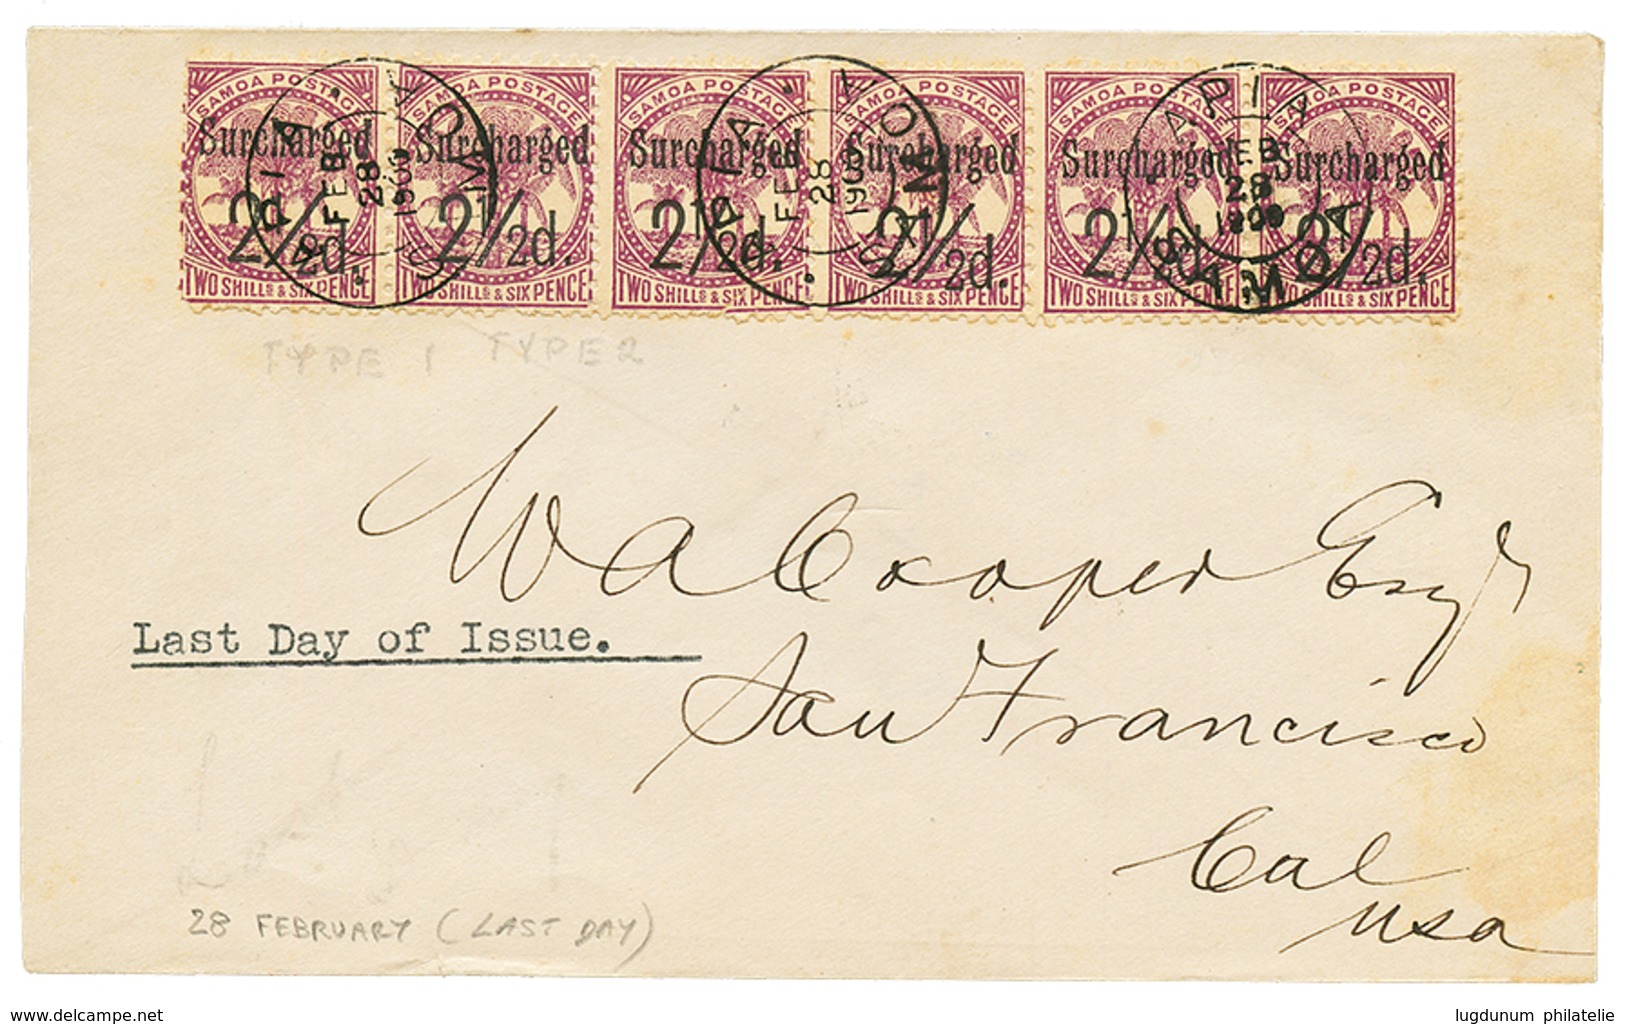 734 SAMOA : 18900 2 1/2d On TWO SHILLING 6 PENCE Strip Of 6 Canc. APIA 28 Feb 1900 On Envelope To SAN FRANCISCO(USA). La - Samoa (Staat)